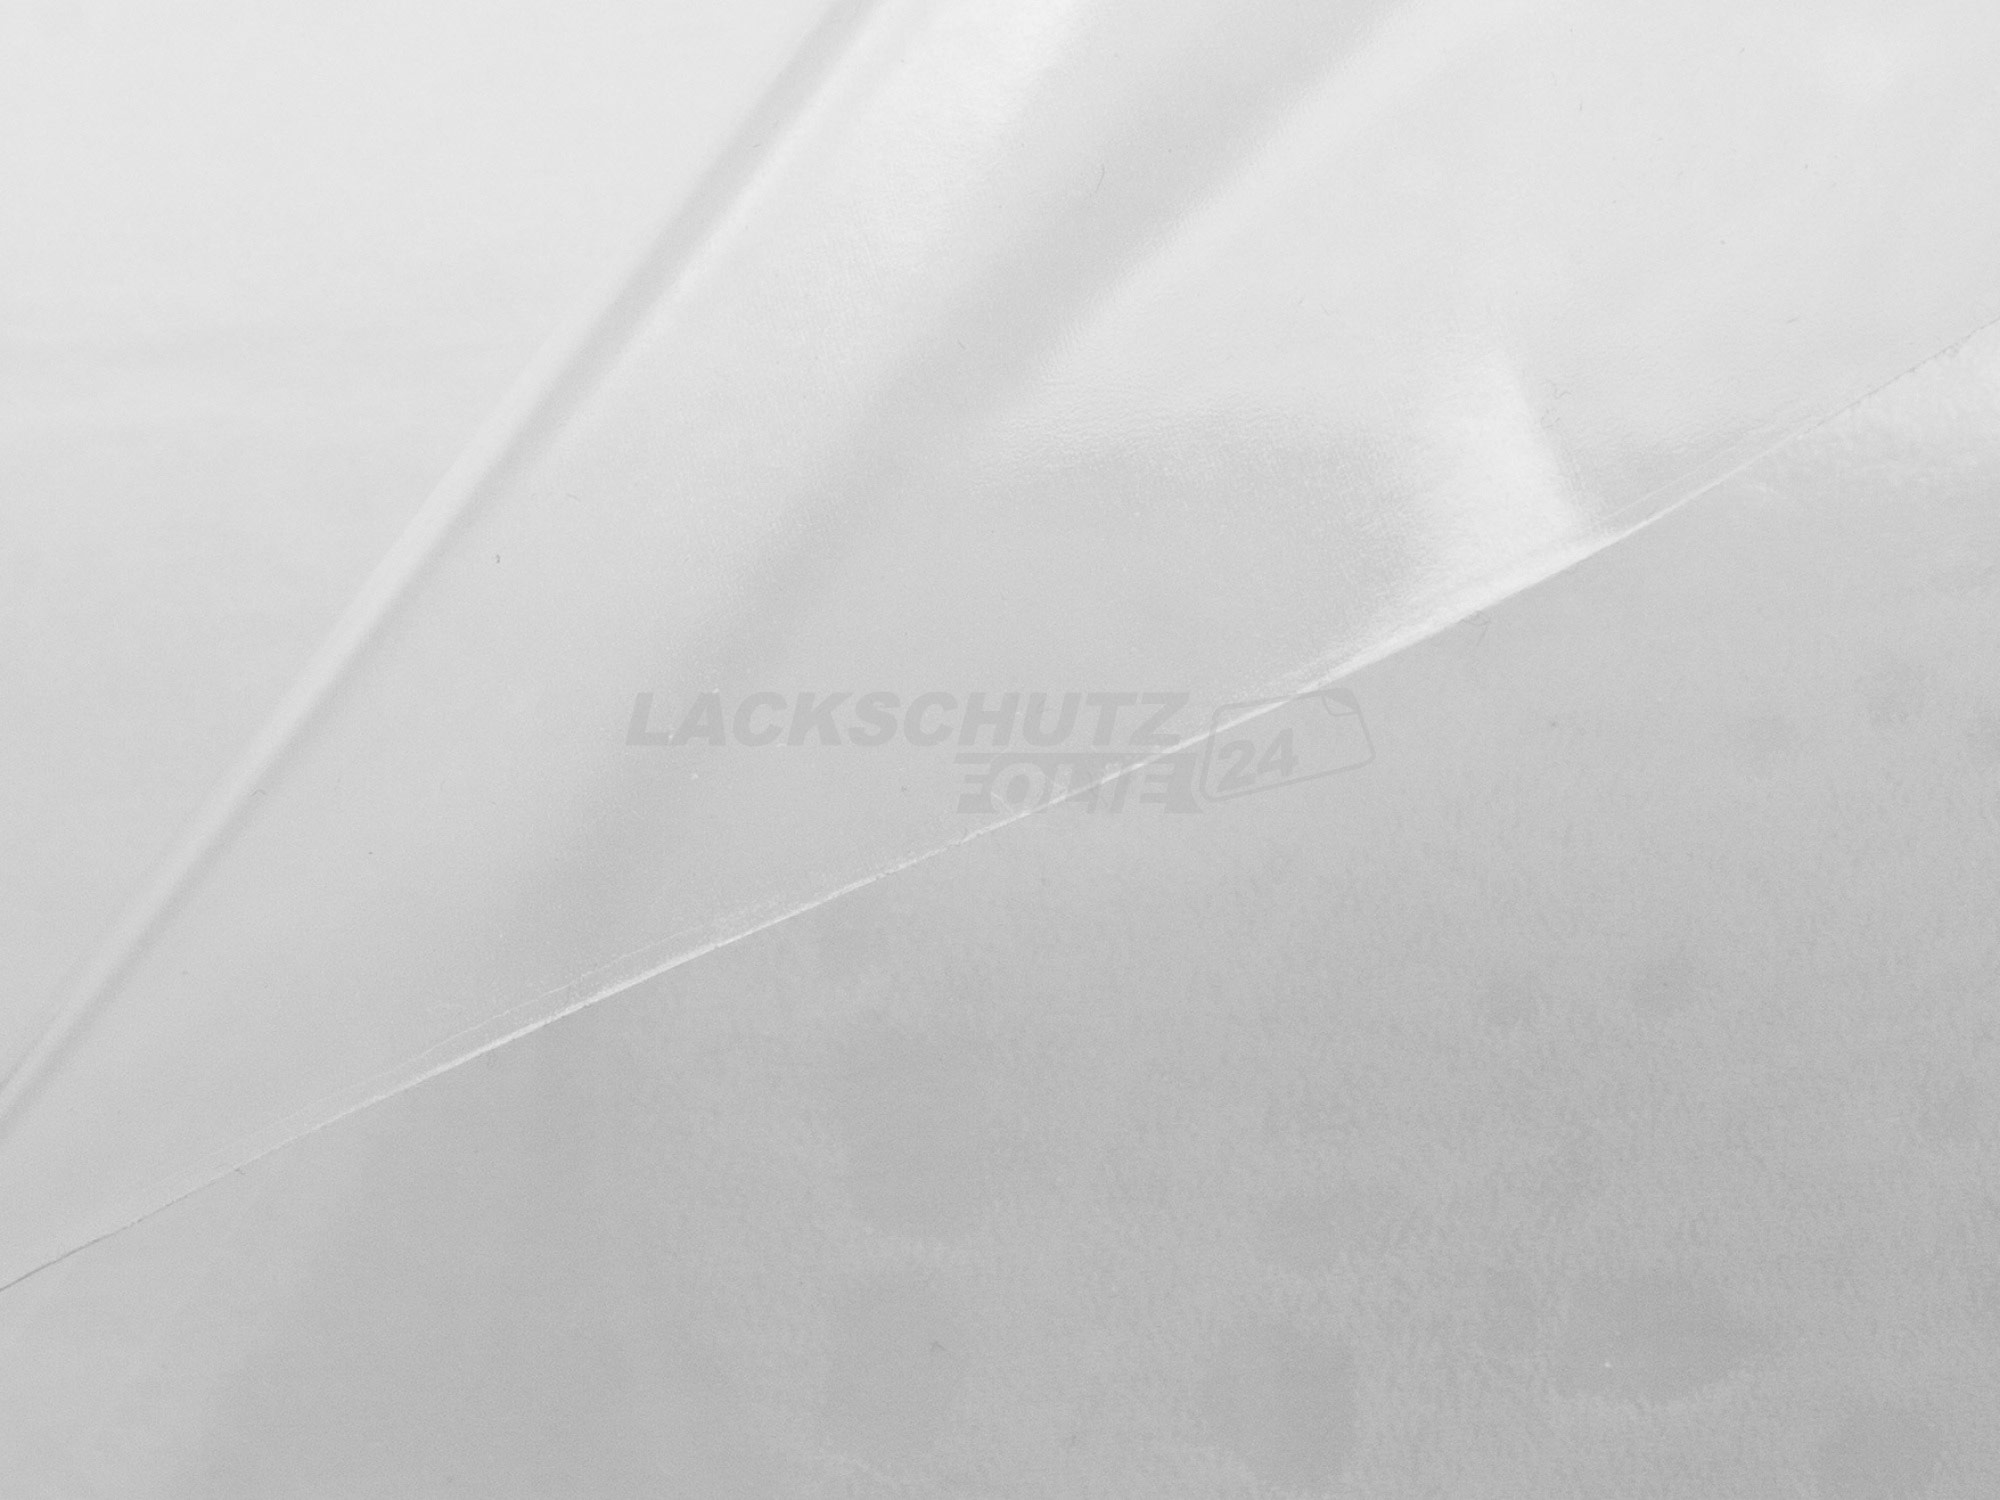 Ladekantenschutzfolie - Transparent Glatt Hochglänzend 240 µm stark für Hyundai i40cw (Kombi) ab BJ 09/2011 + Facelift